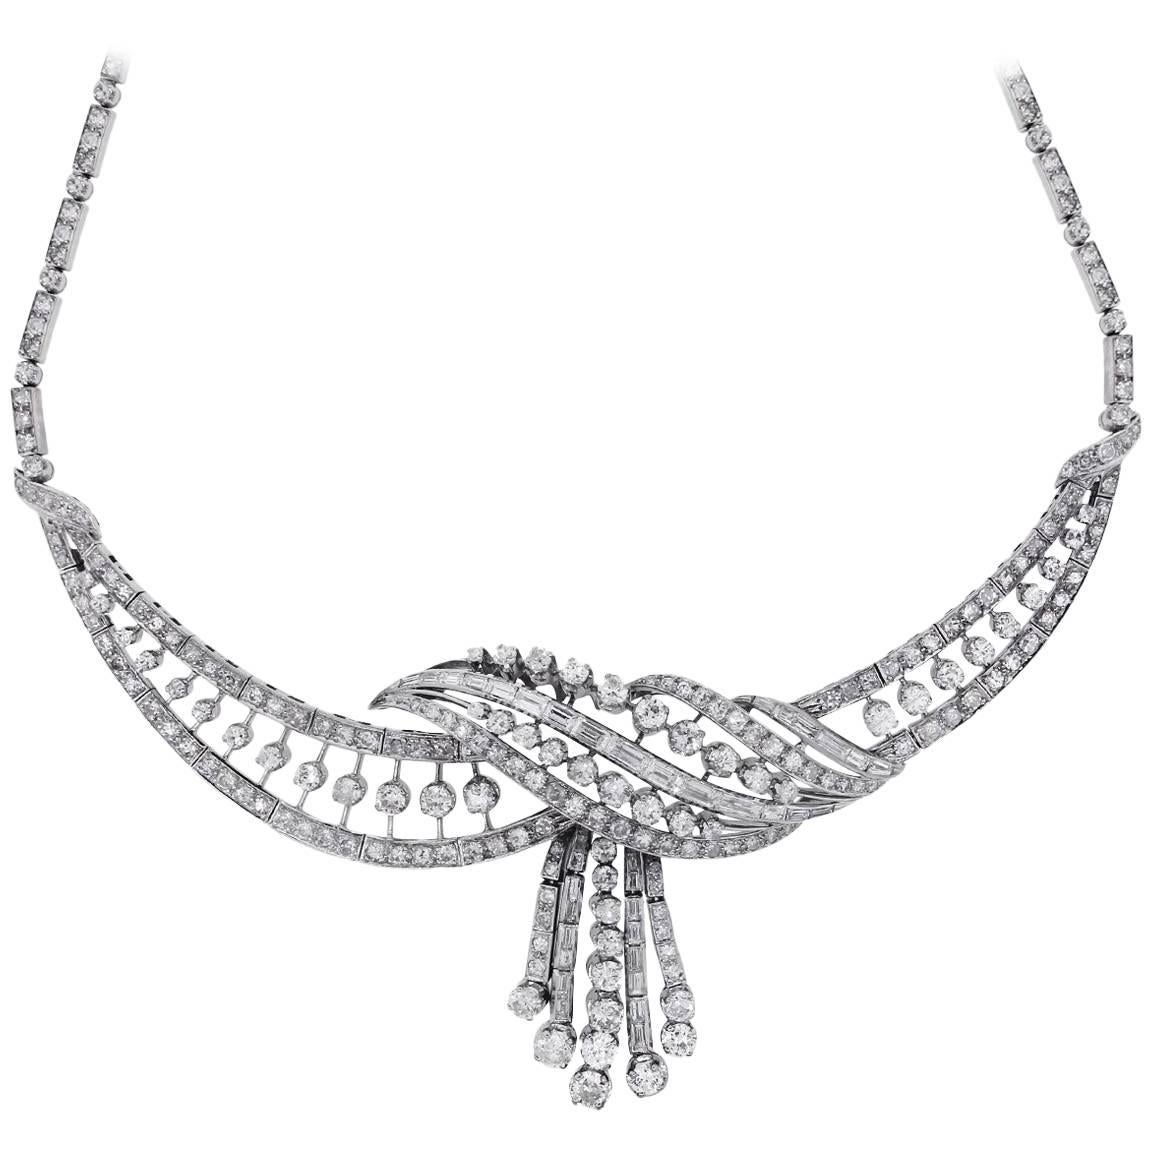 10 Carat Diamond Vintage Choker Necklace